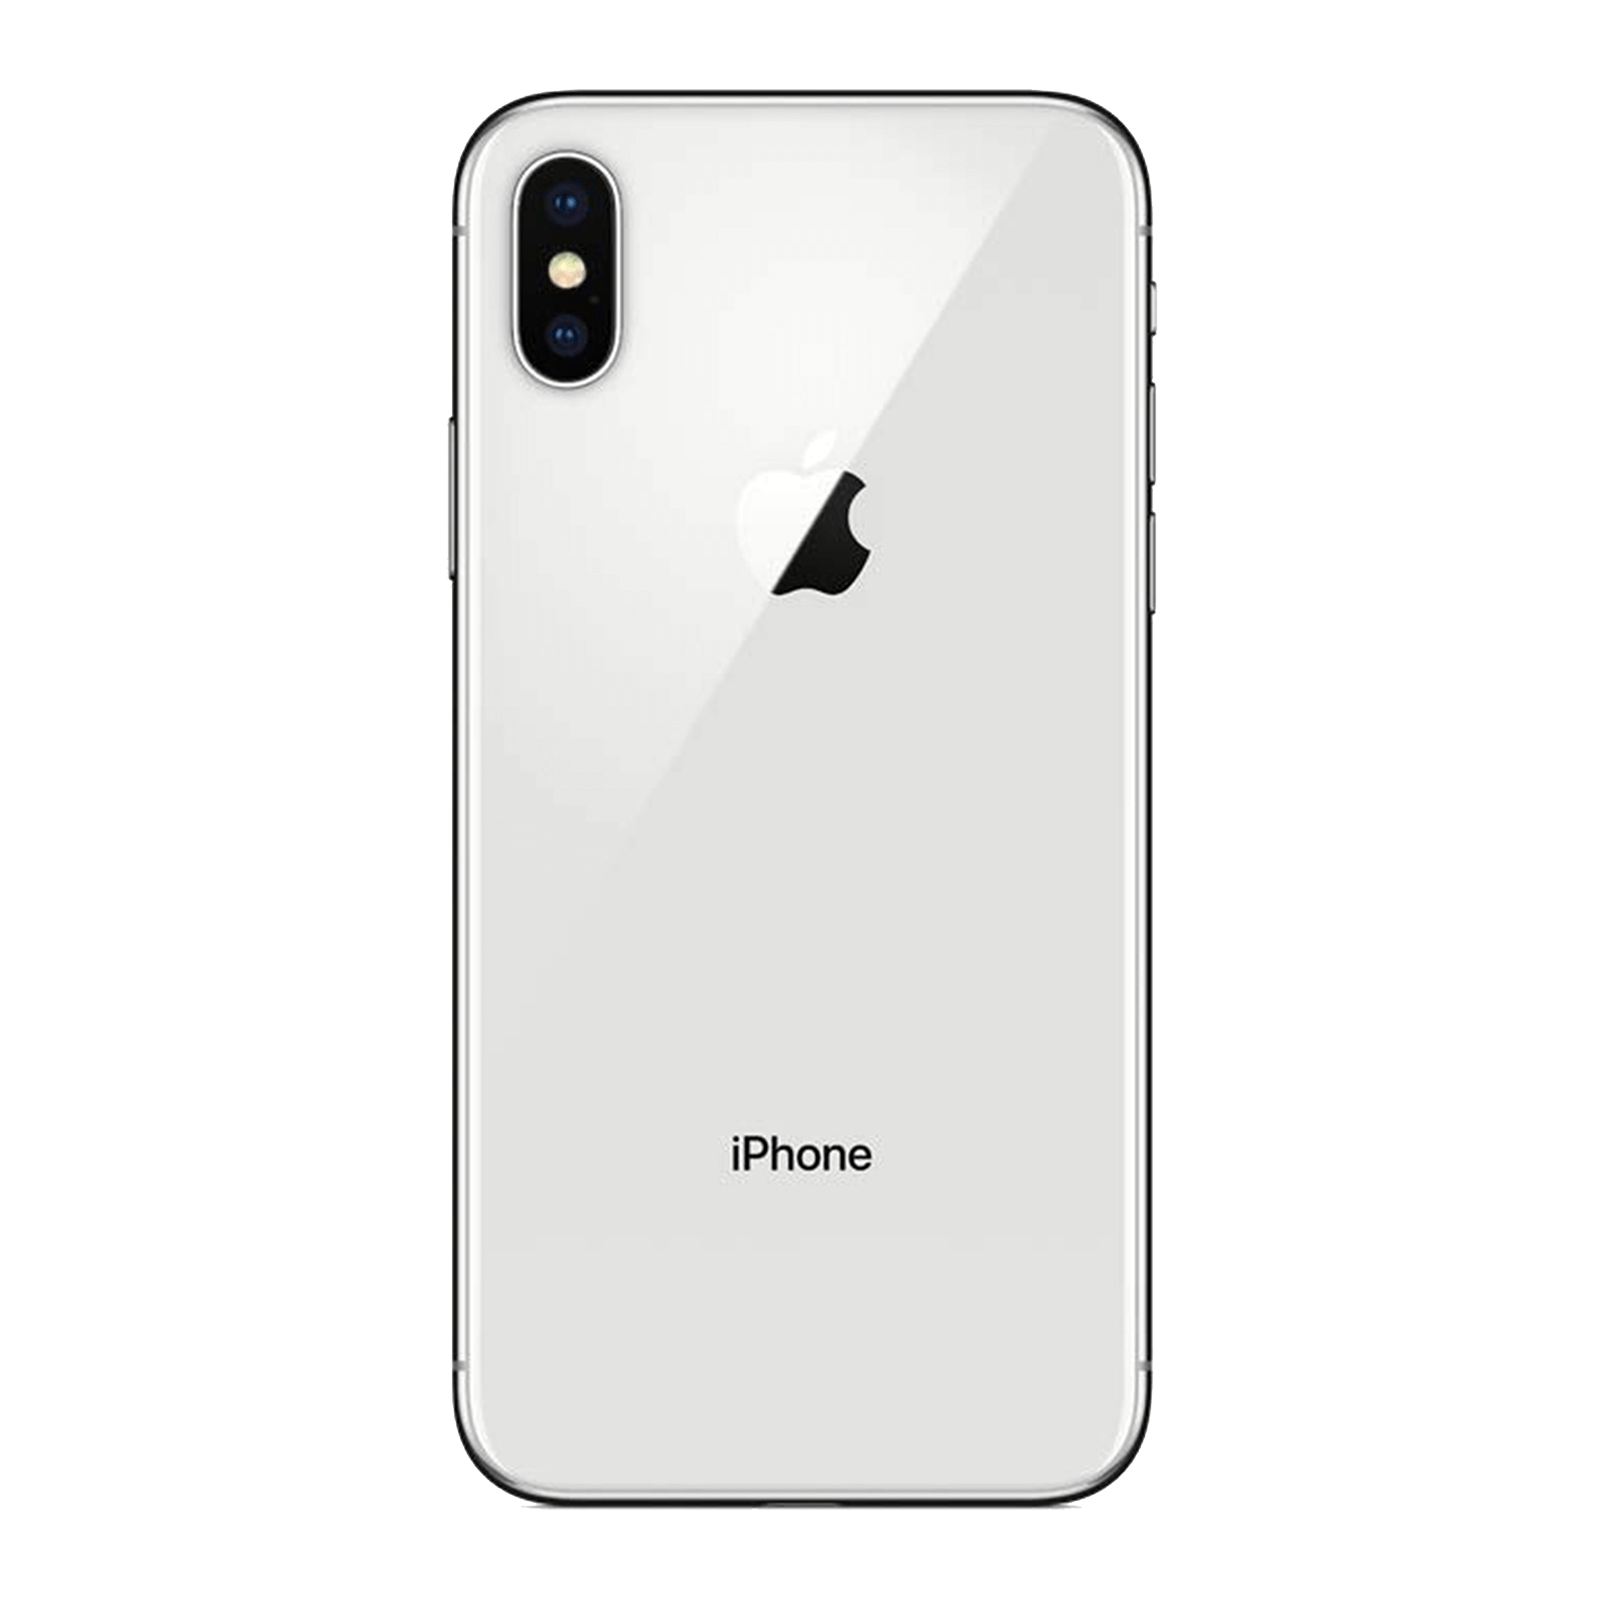 Apple iPhone X 256GB Silver Fair - Unlocked